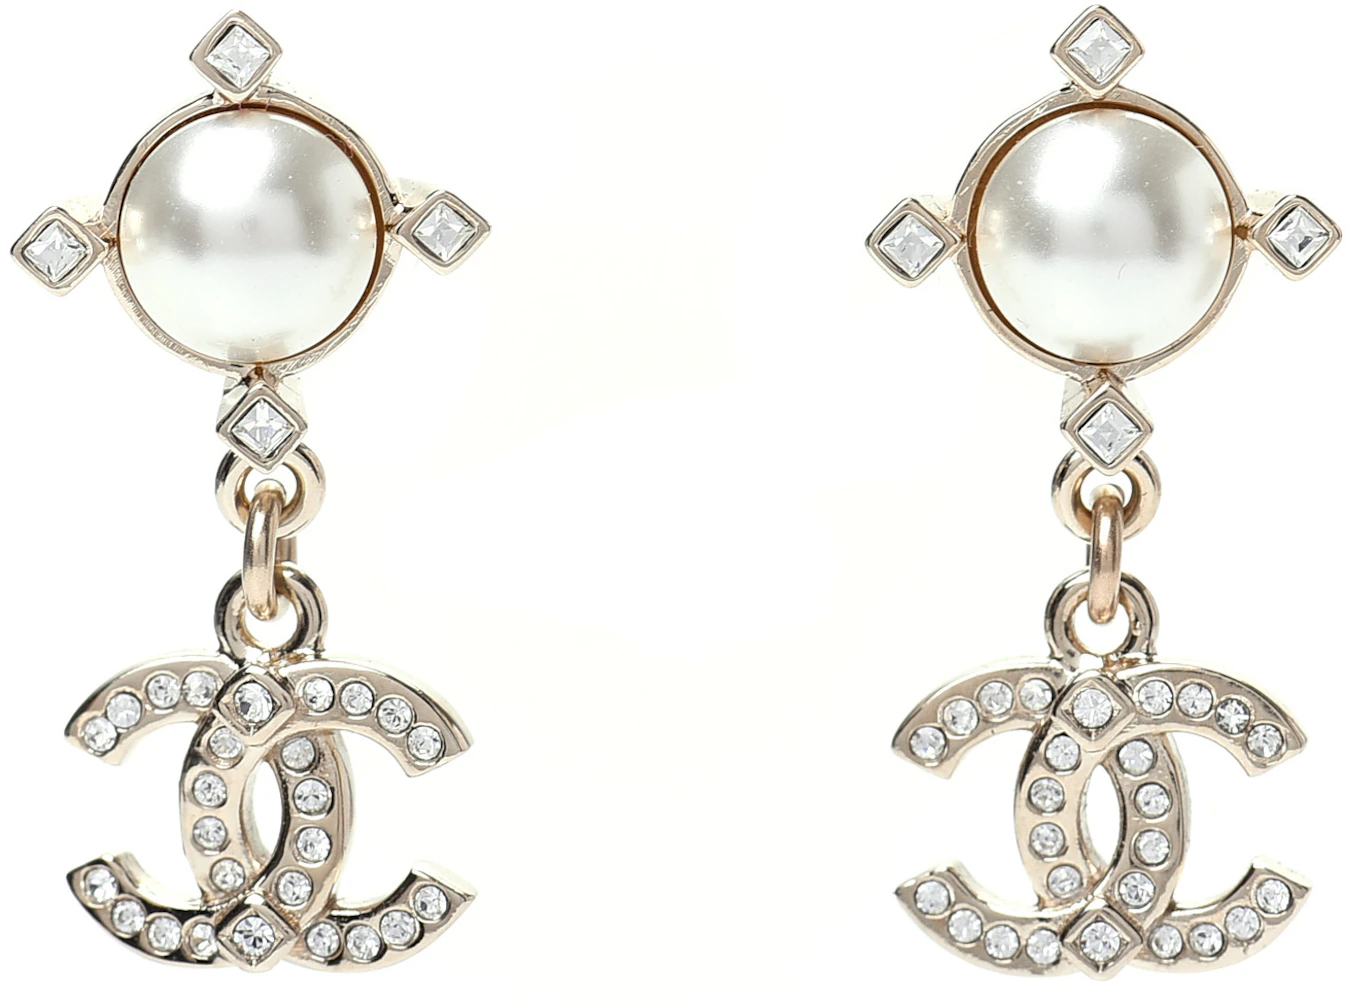 Disco Ball Earrings Jewellery Gold Vermeil Pearls Rhinestones 